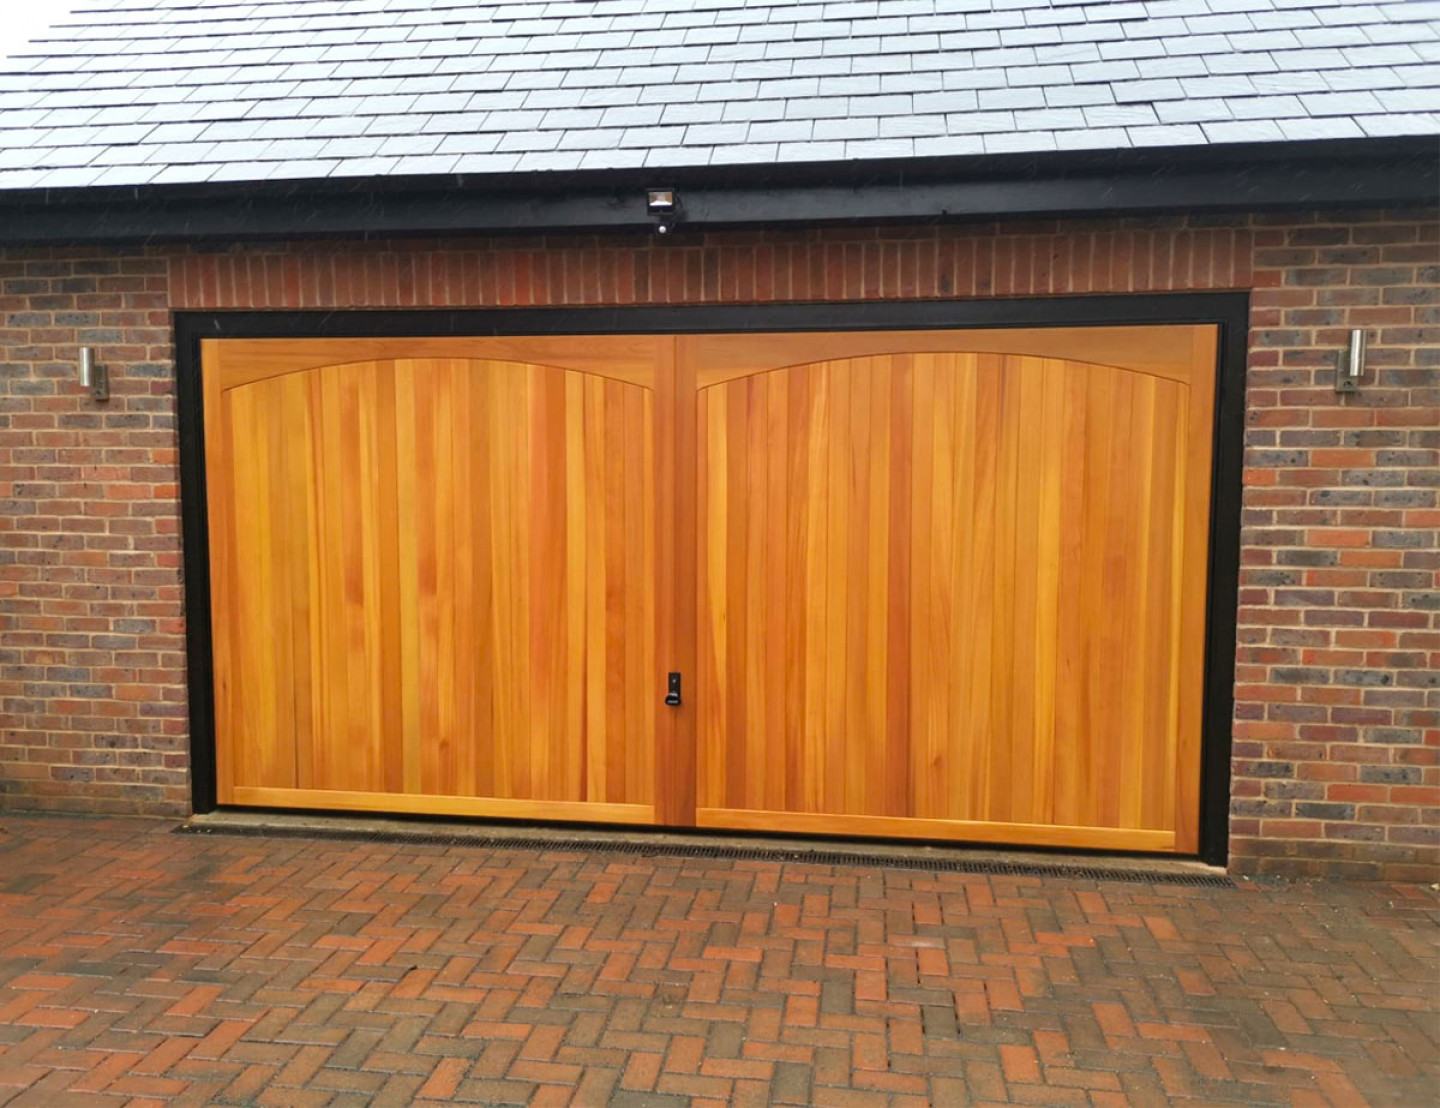 Extra wide garage doors are now a major feature in modern builds. Left, the Garage Door Worshop in Bedfordshire  recently installed this stand out wooden double Garador door.